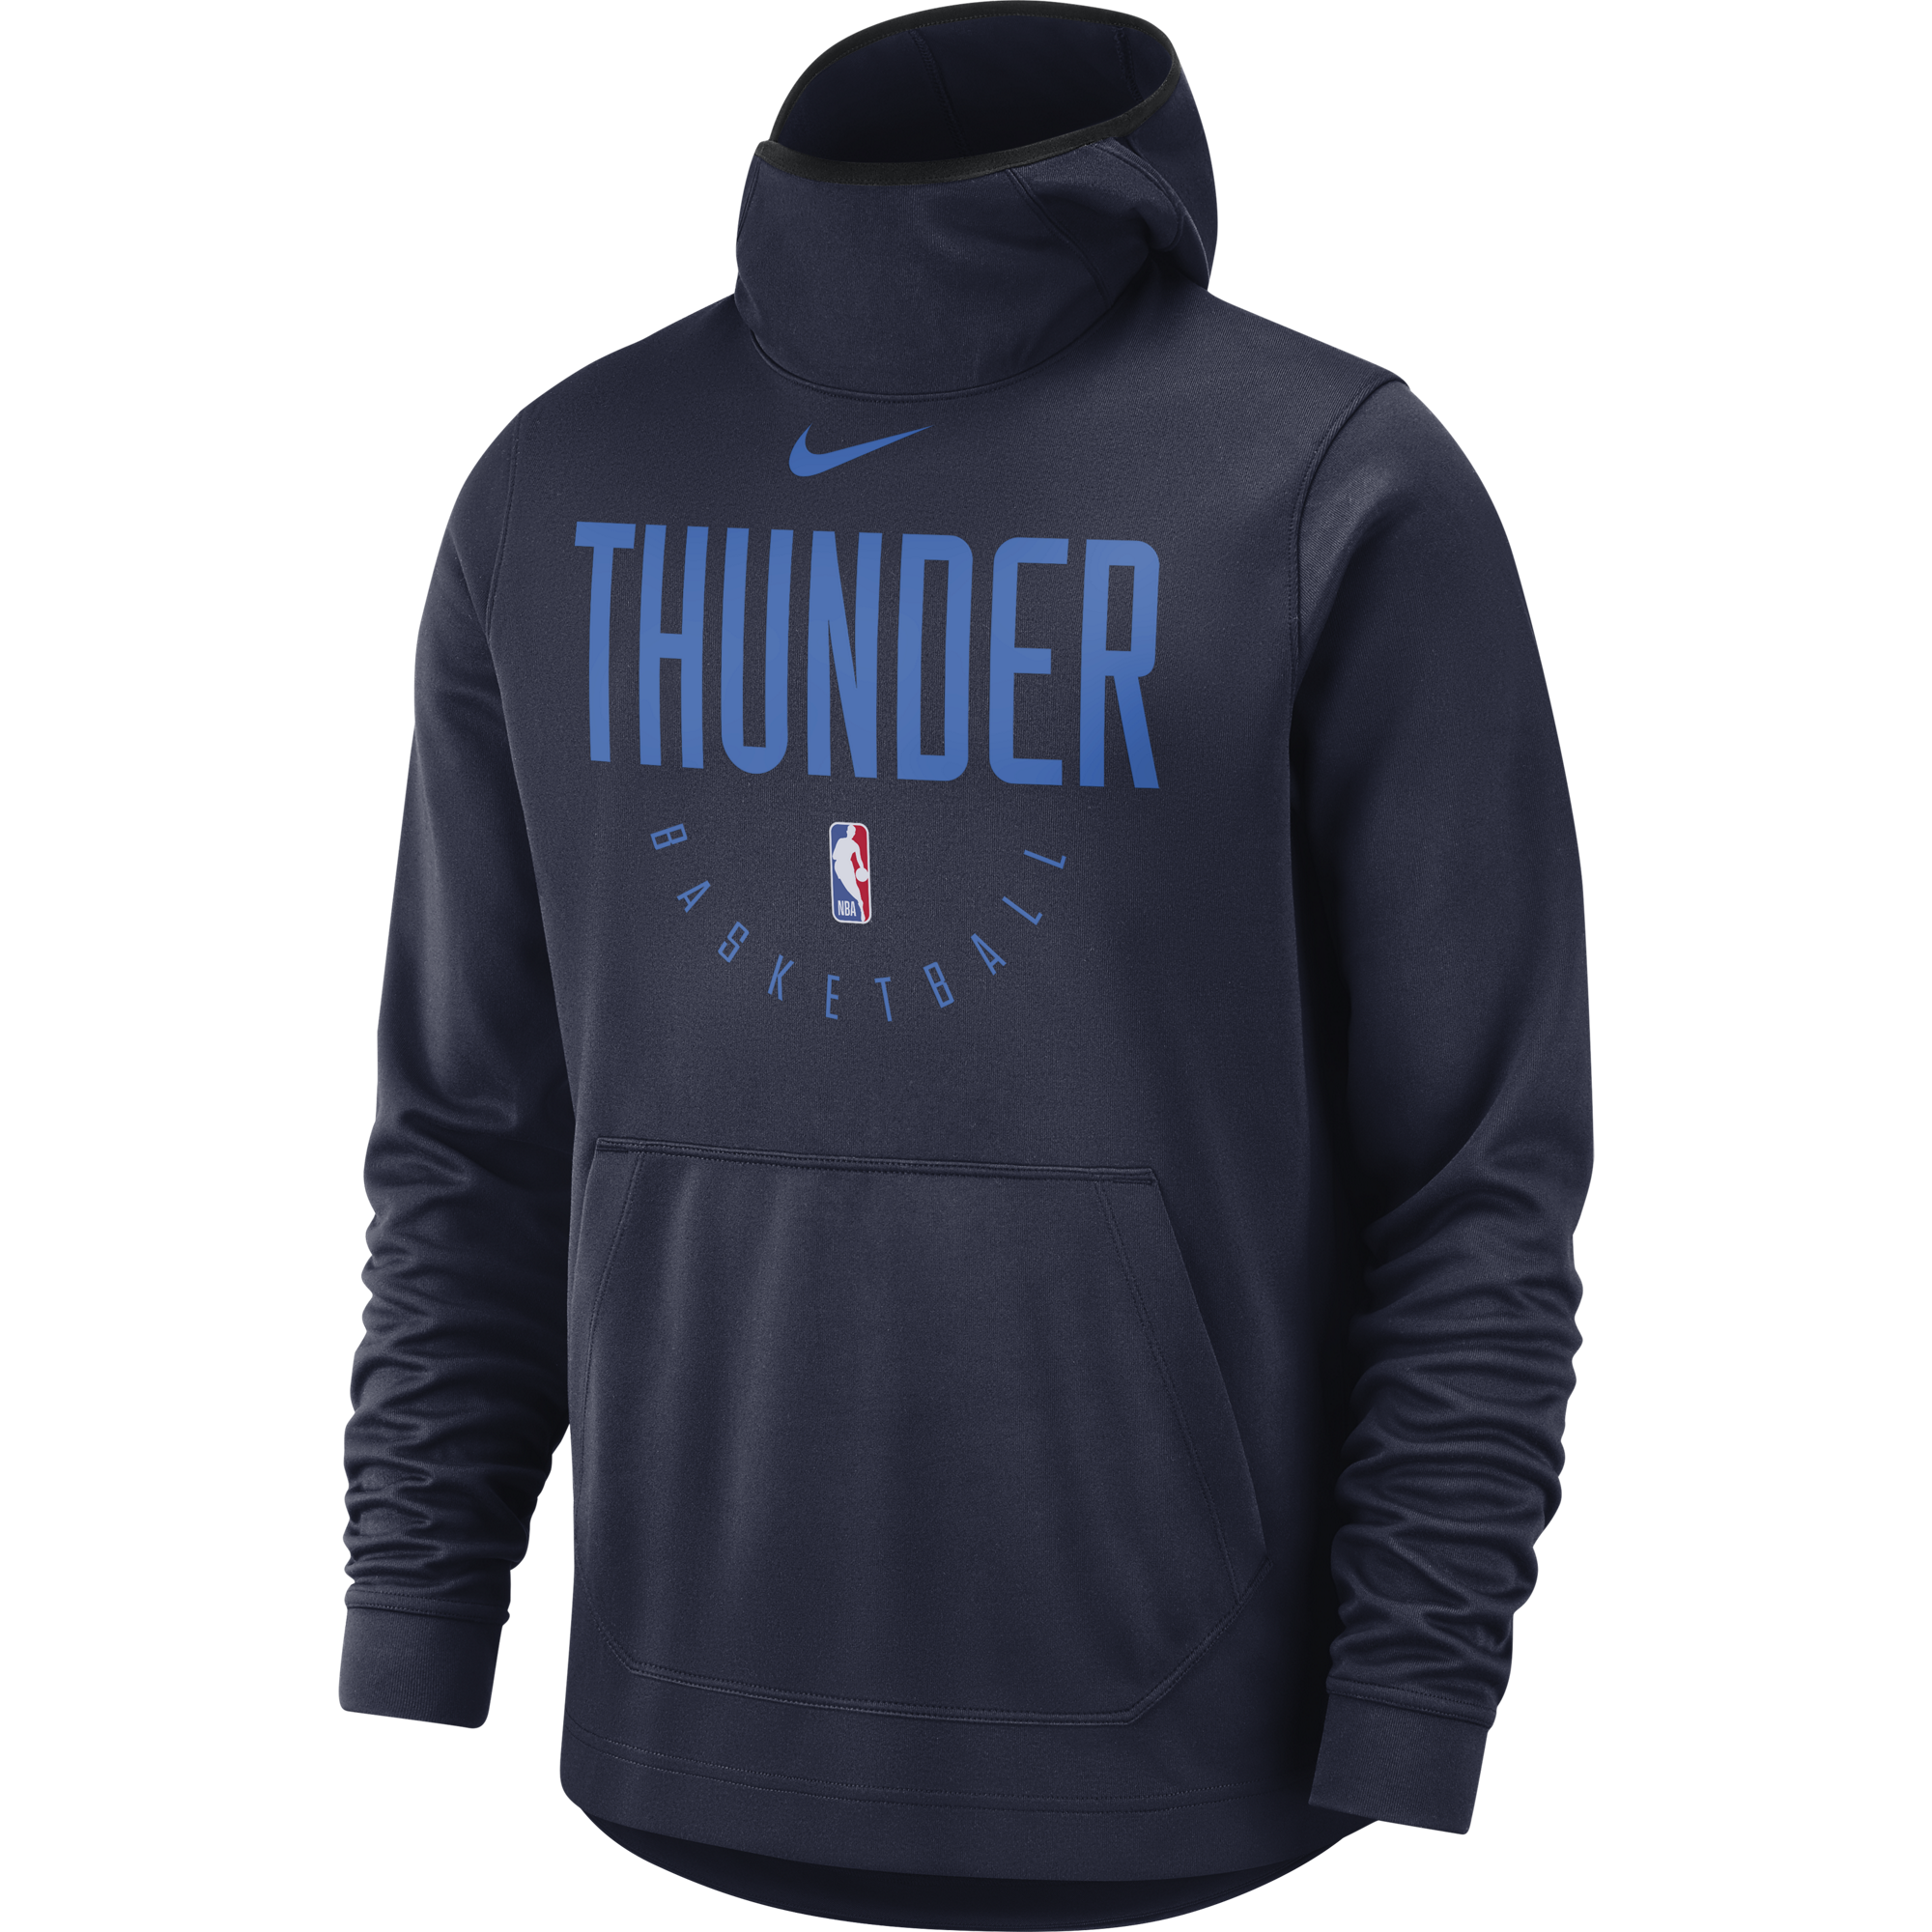 thunder hoodie nike